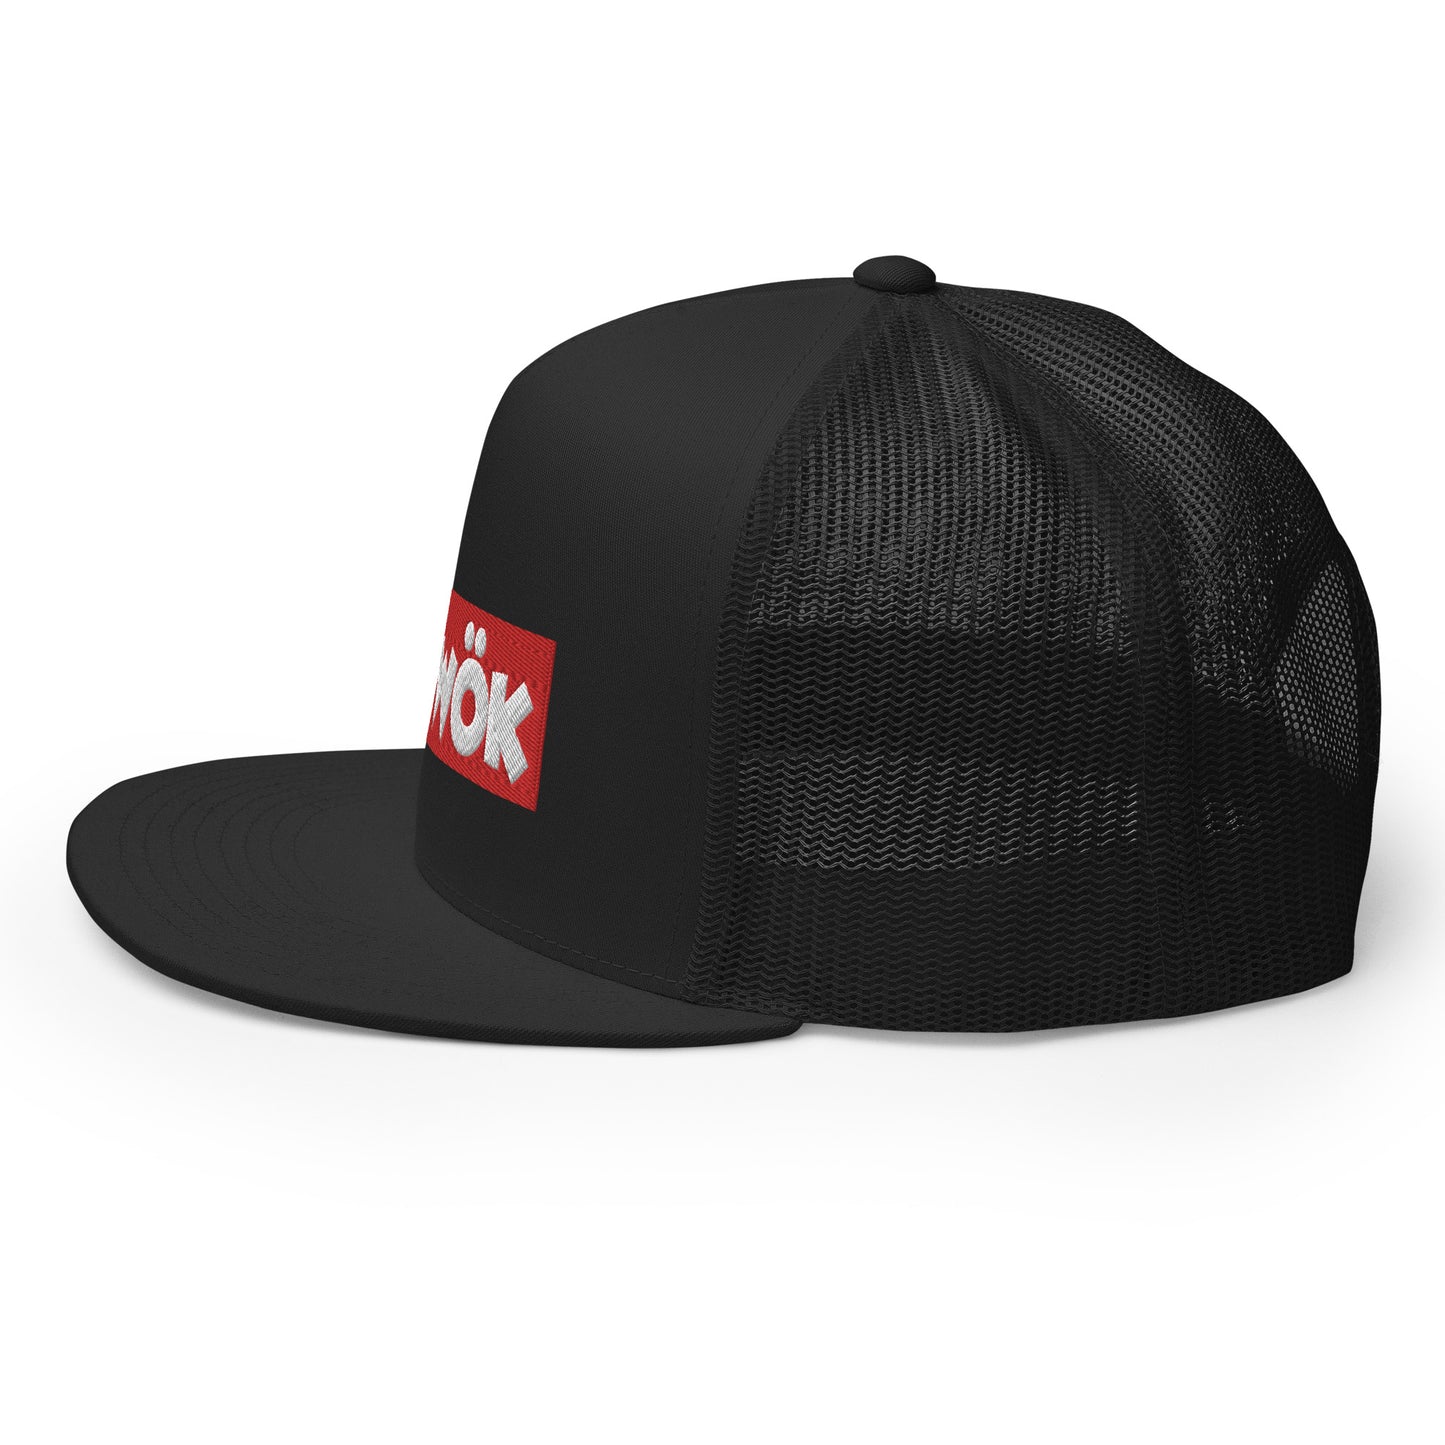 Skwok Brand / Hat / Trucker Cap / Box Logo / Black